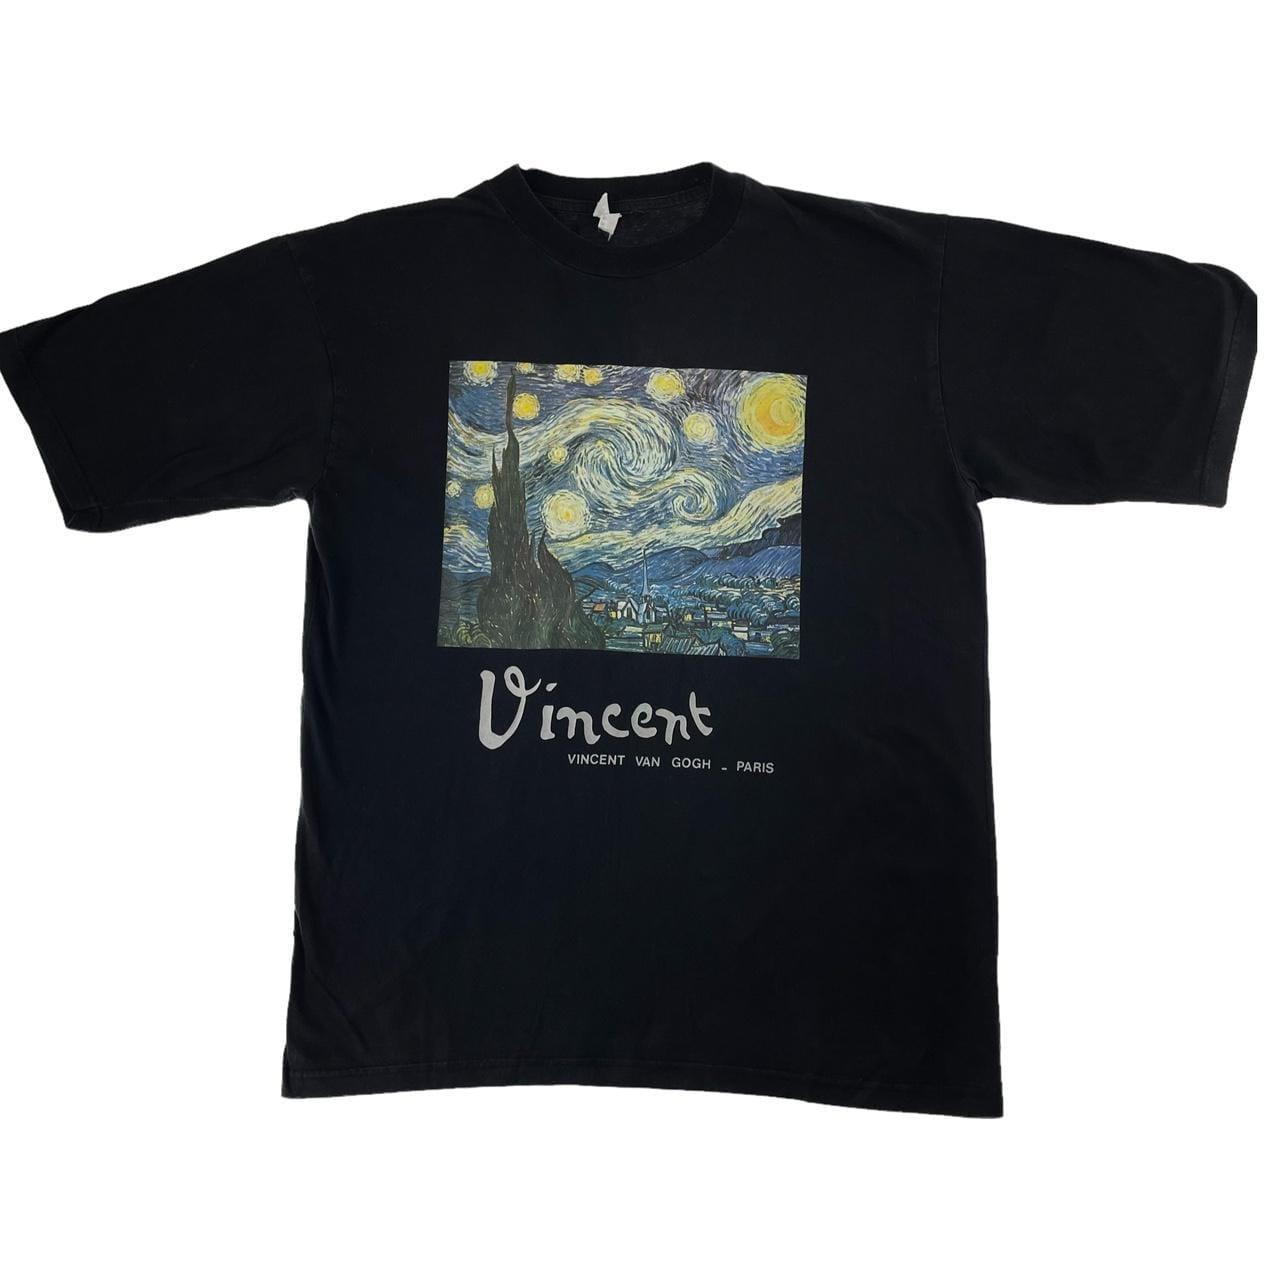 Vintage Van Gogh starry night art t shirt size L - Known Source